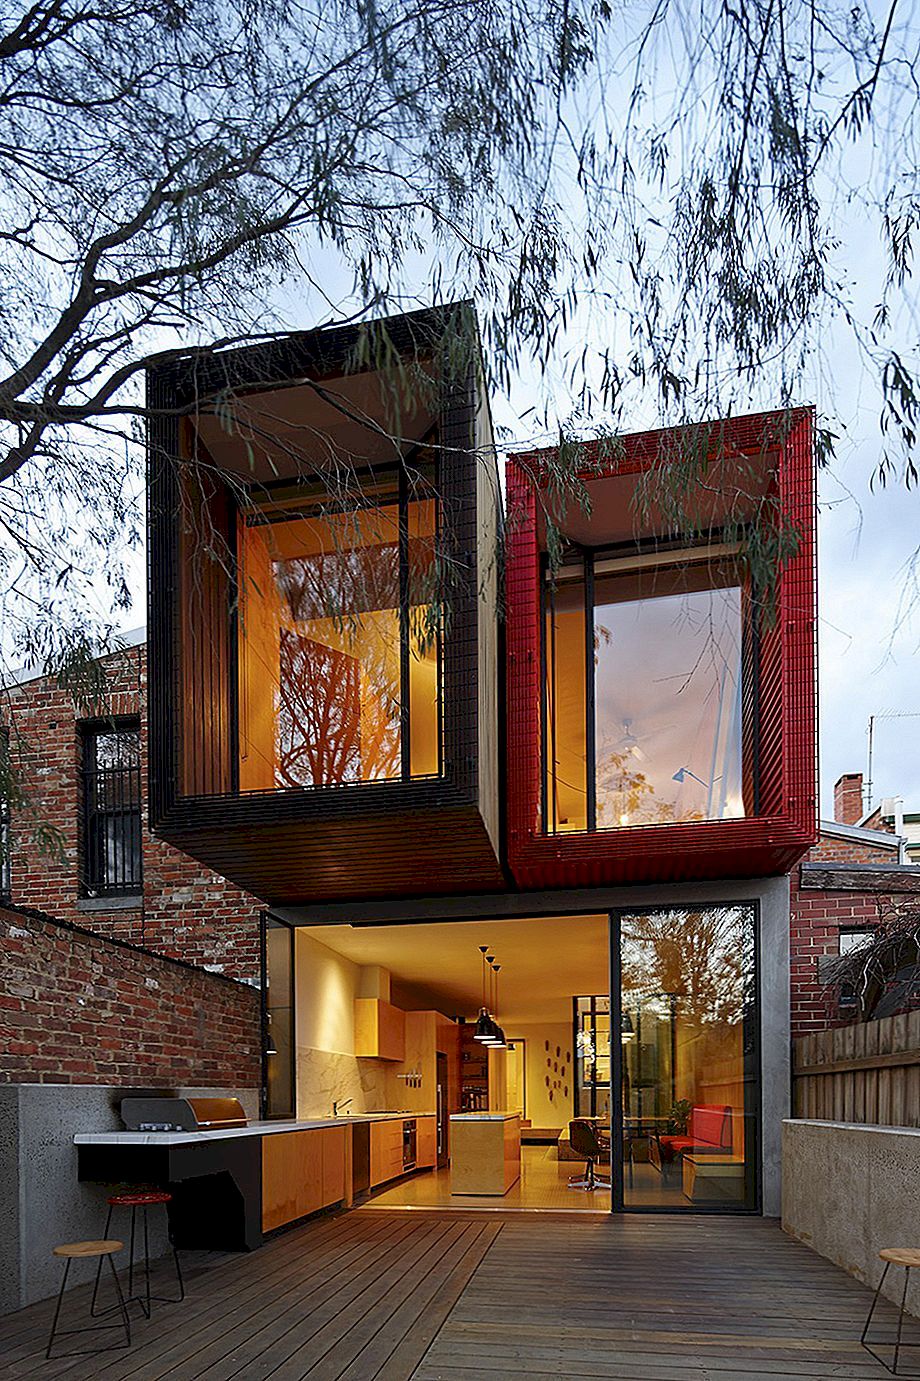 Kuća s japanskim javorovim stablom u Melbourneu od strane Andrew Maynard